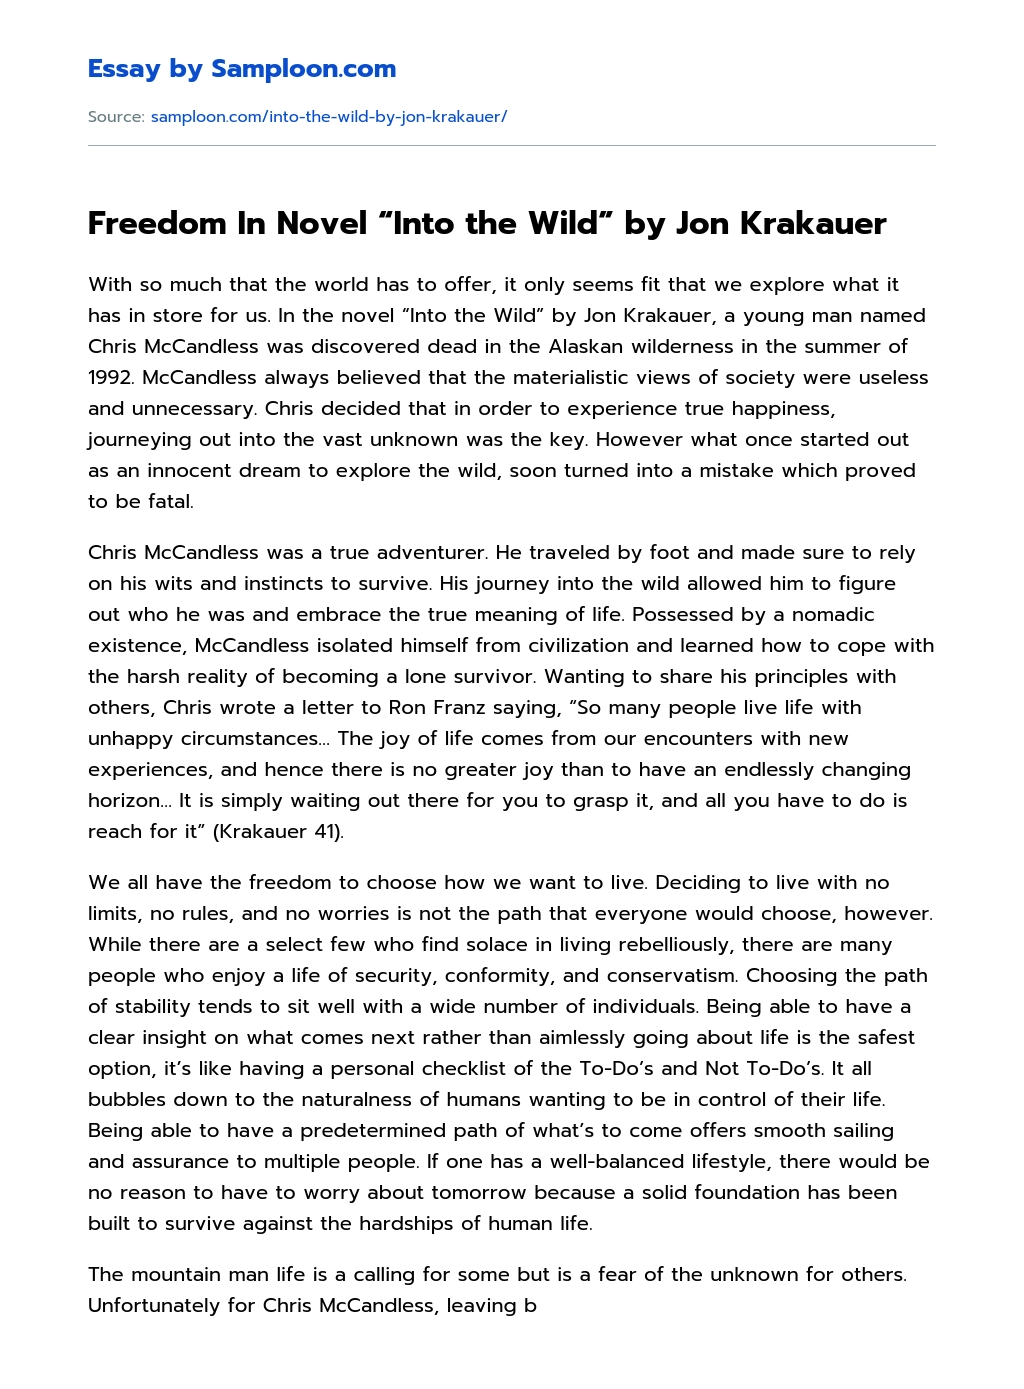 Freedom In Novel “Into the Wild” by Jon Krakauer essay